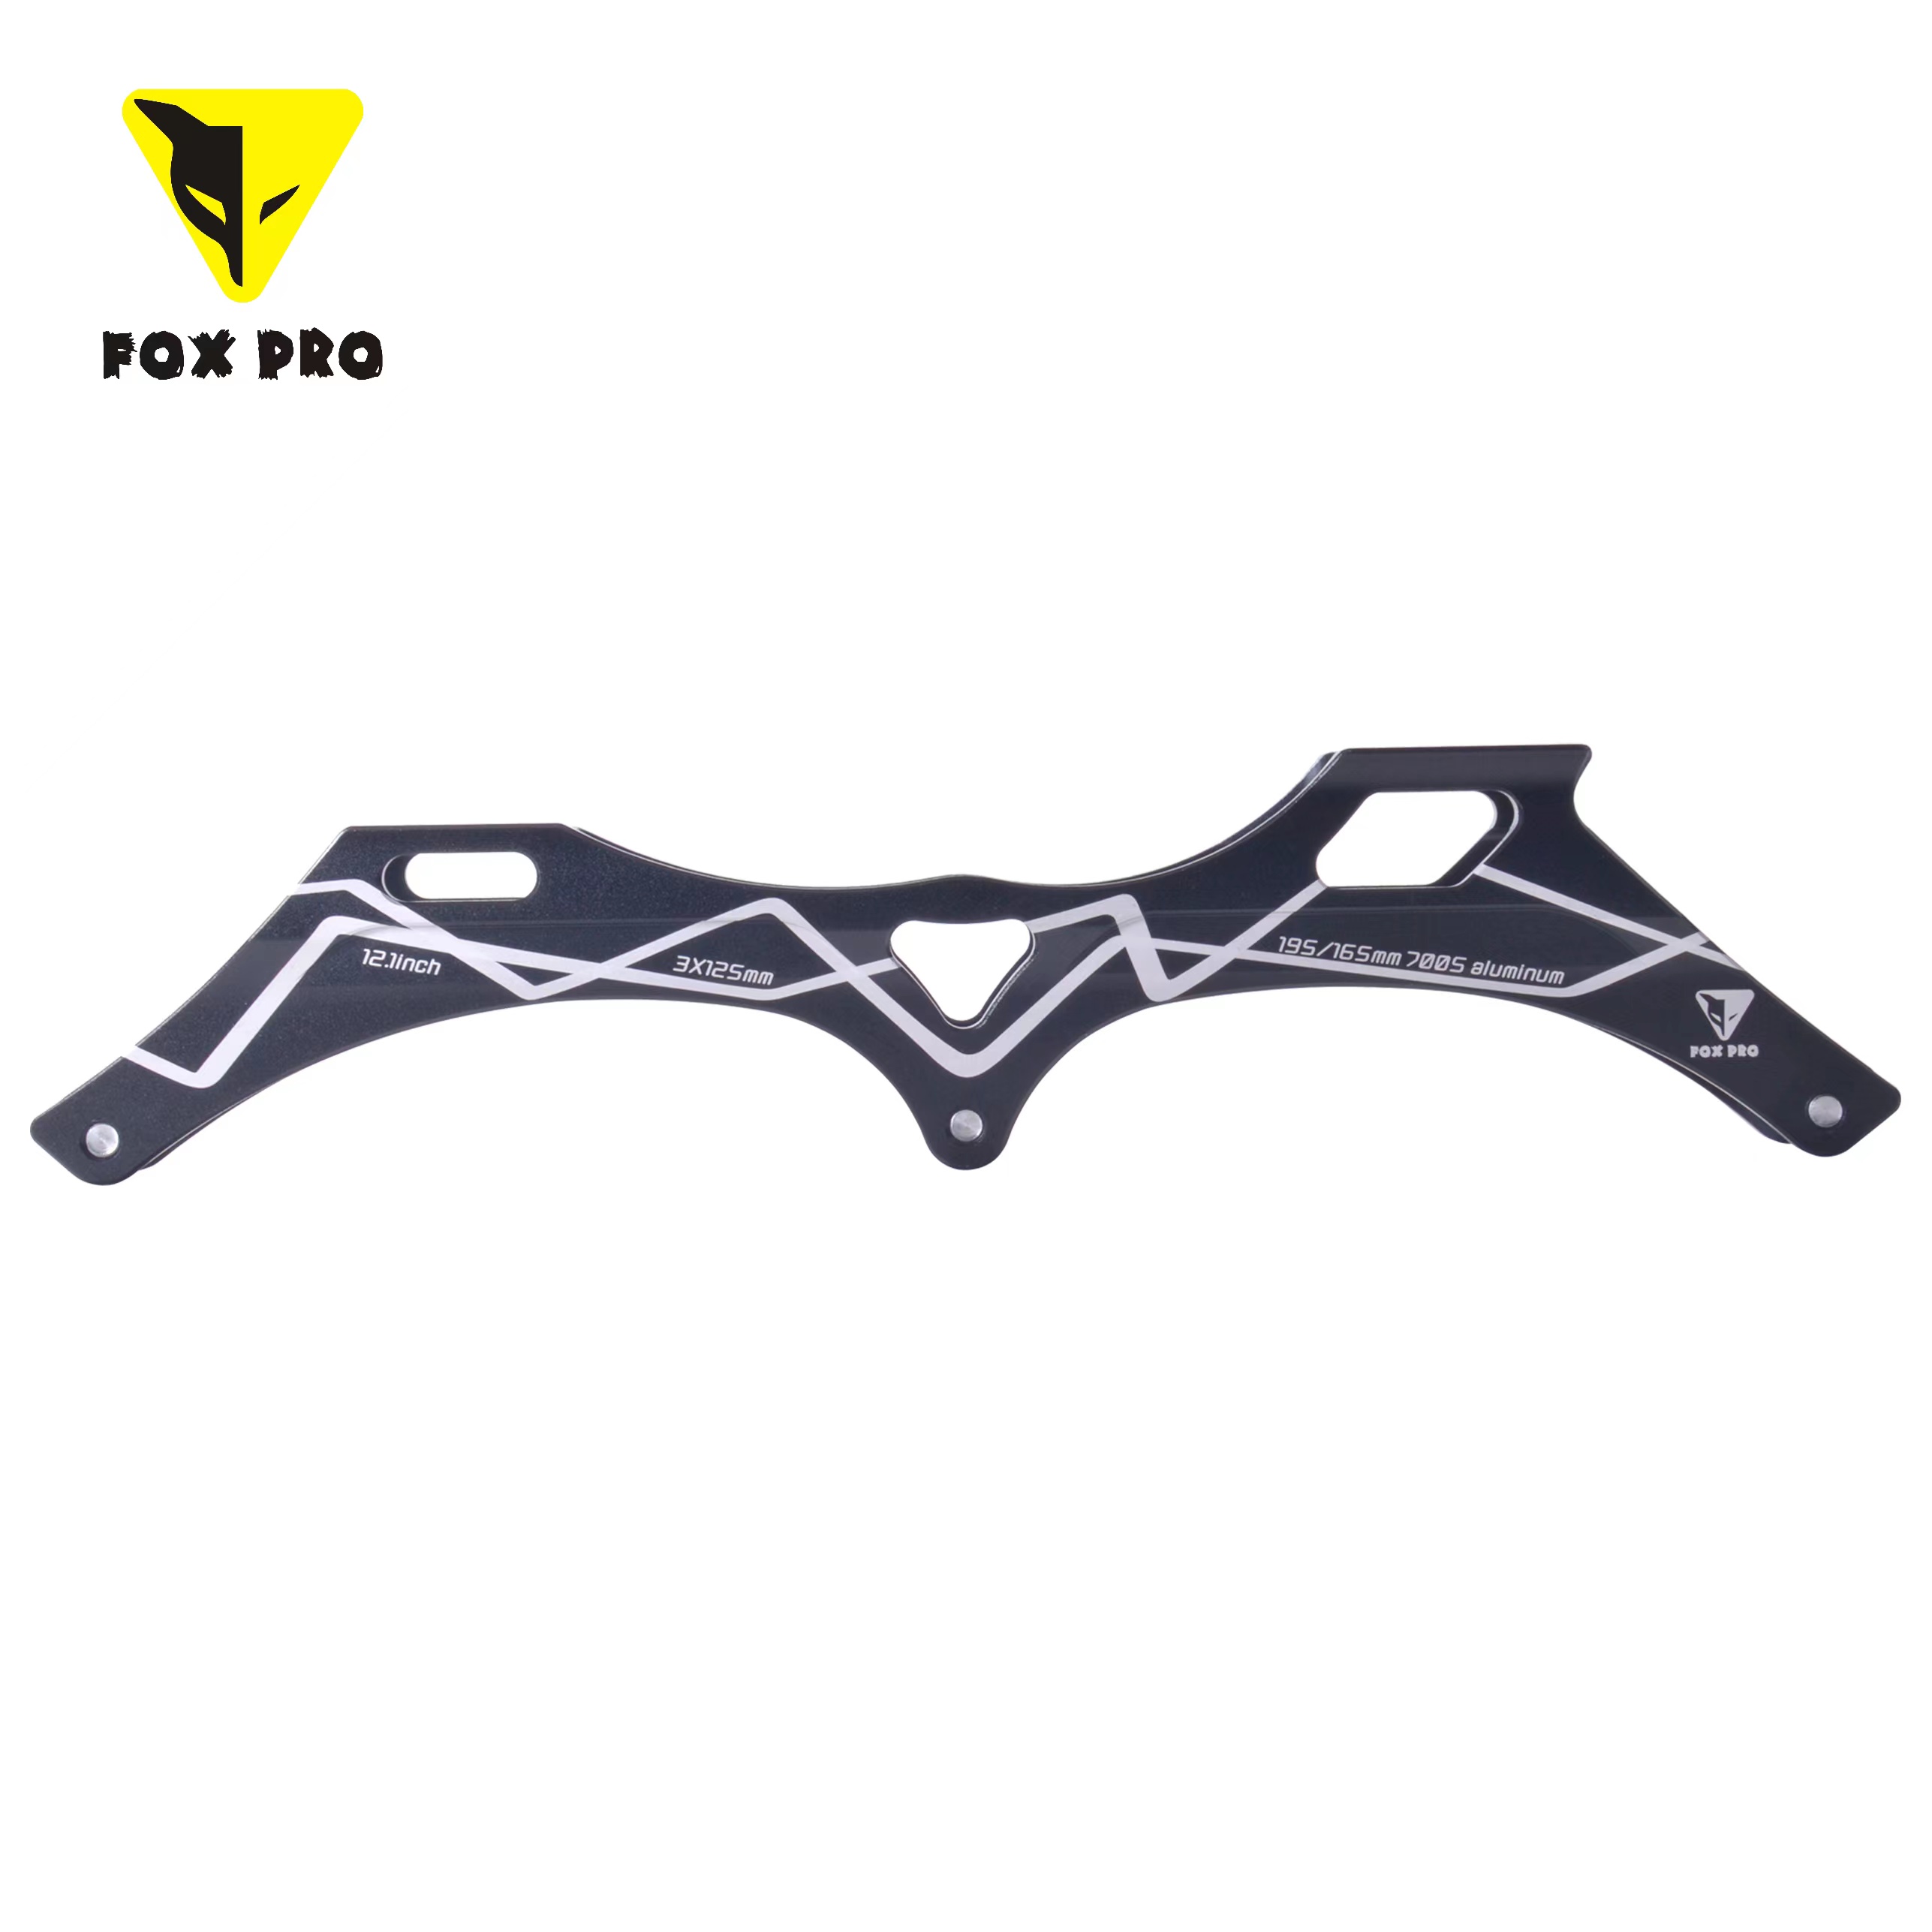 FOX PRO-KP3125 Speed Skate Frame 7005 Aluminium CNC 3125MM Inline Skate Frames